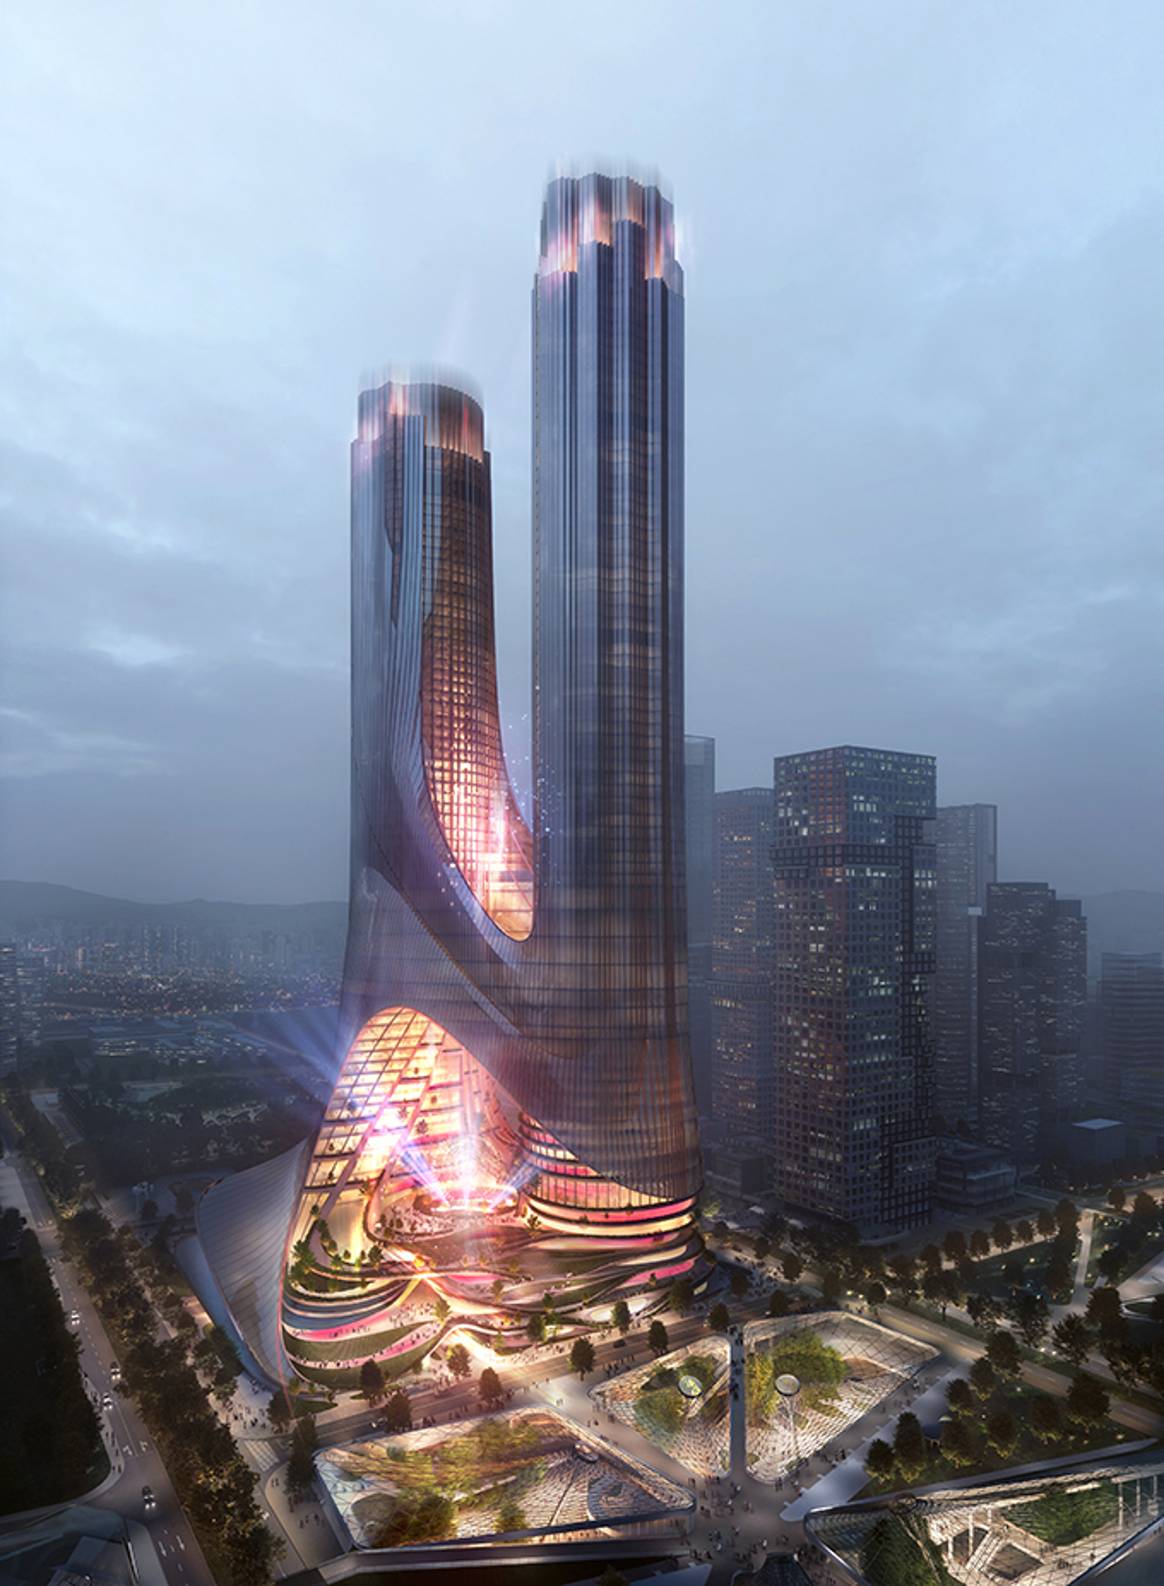 Image: Tower C in Shenzen by architect Zaha Hadid